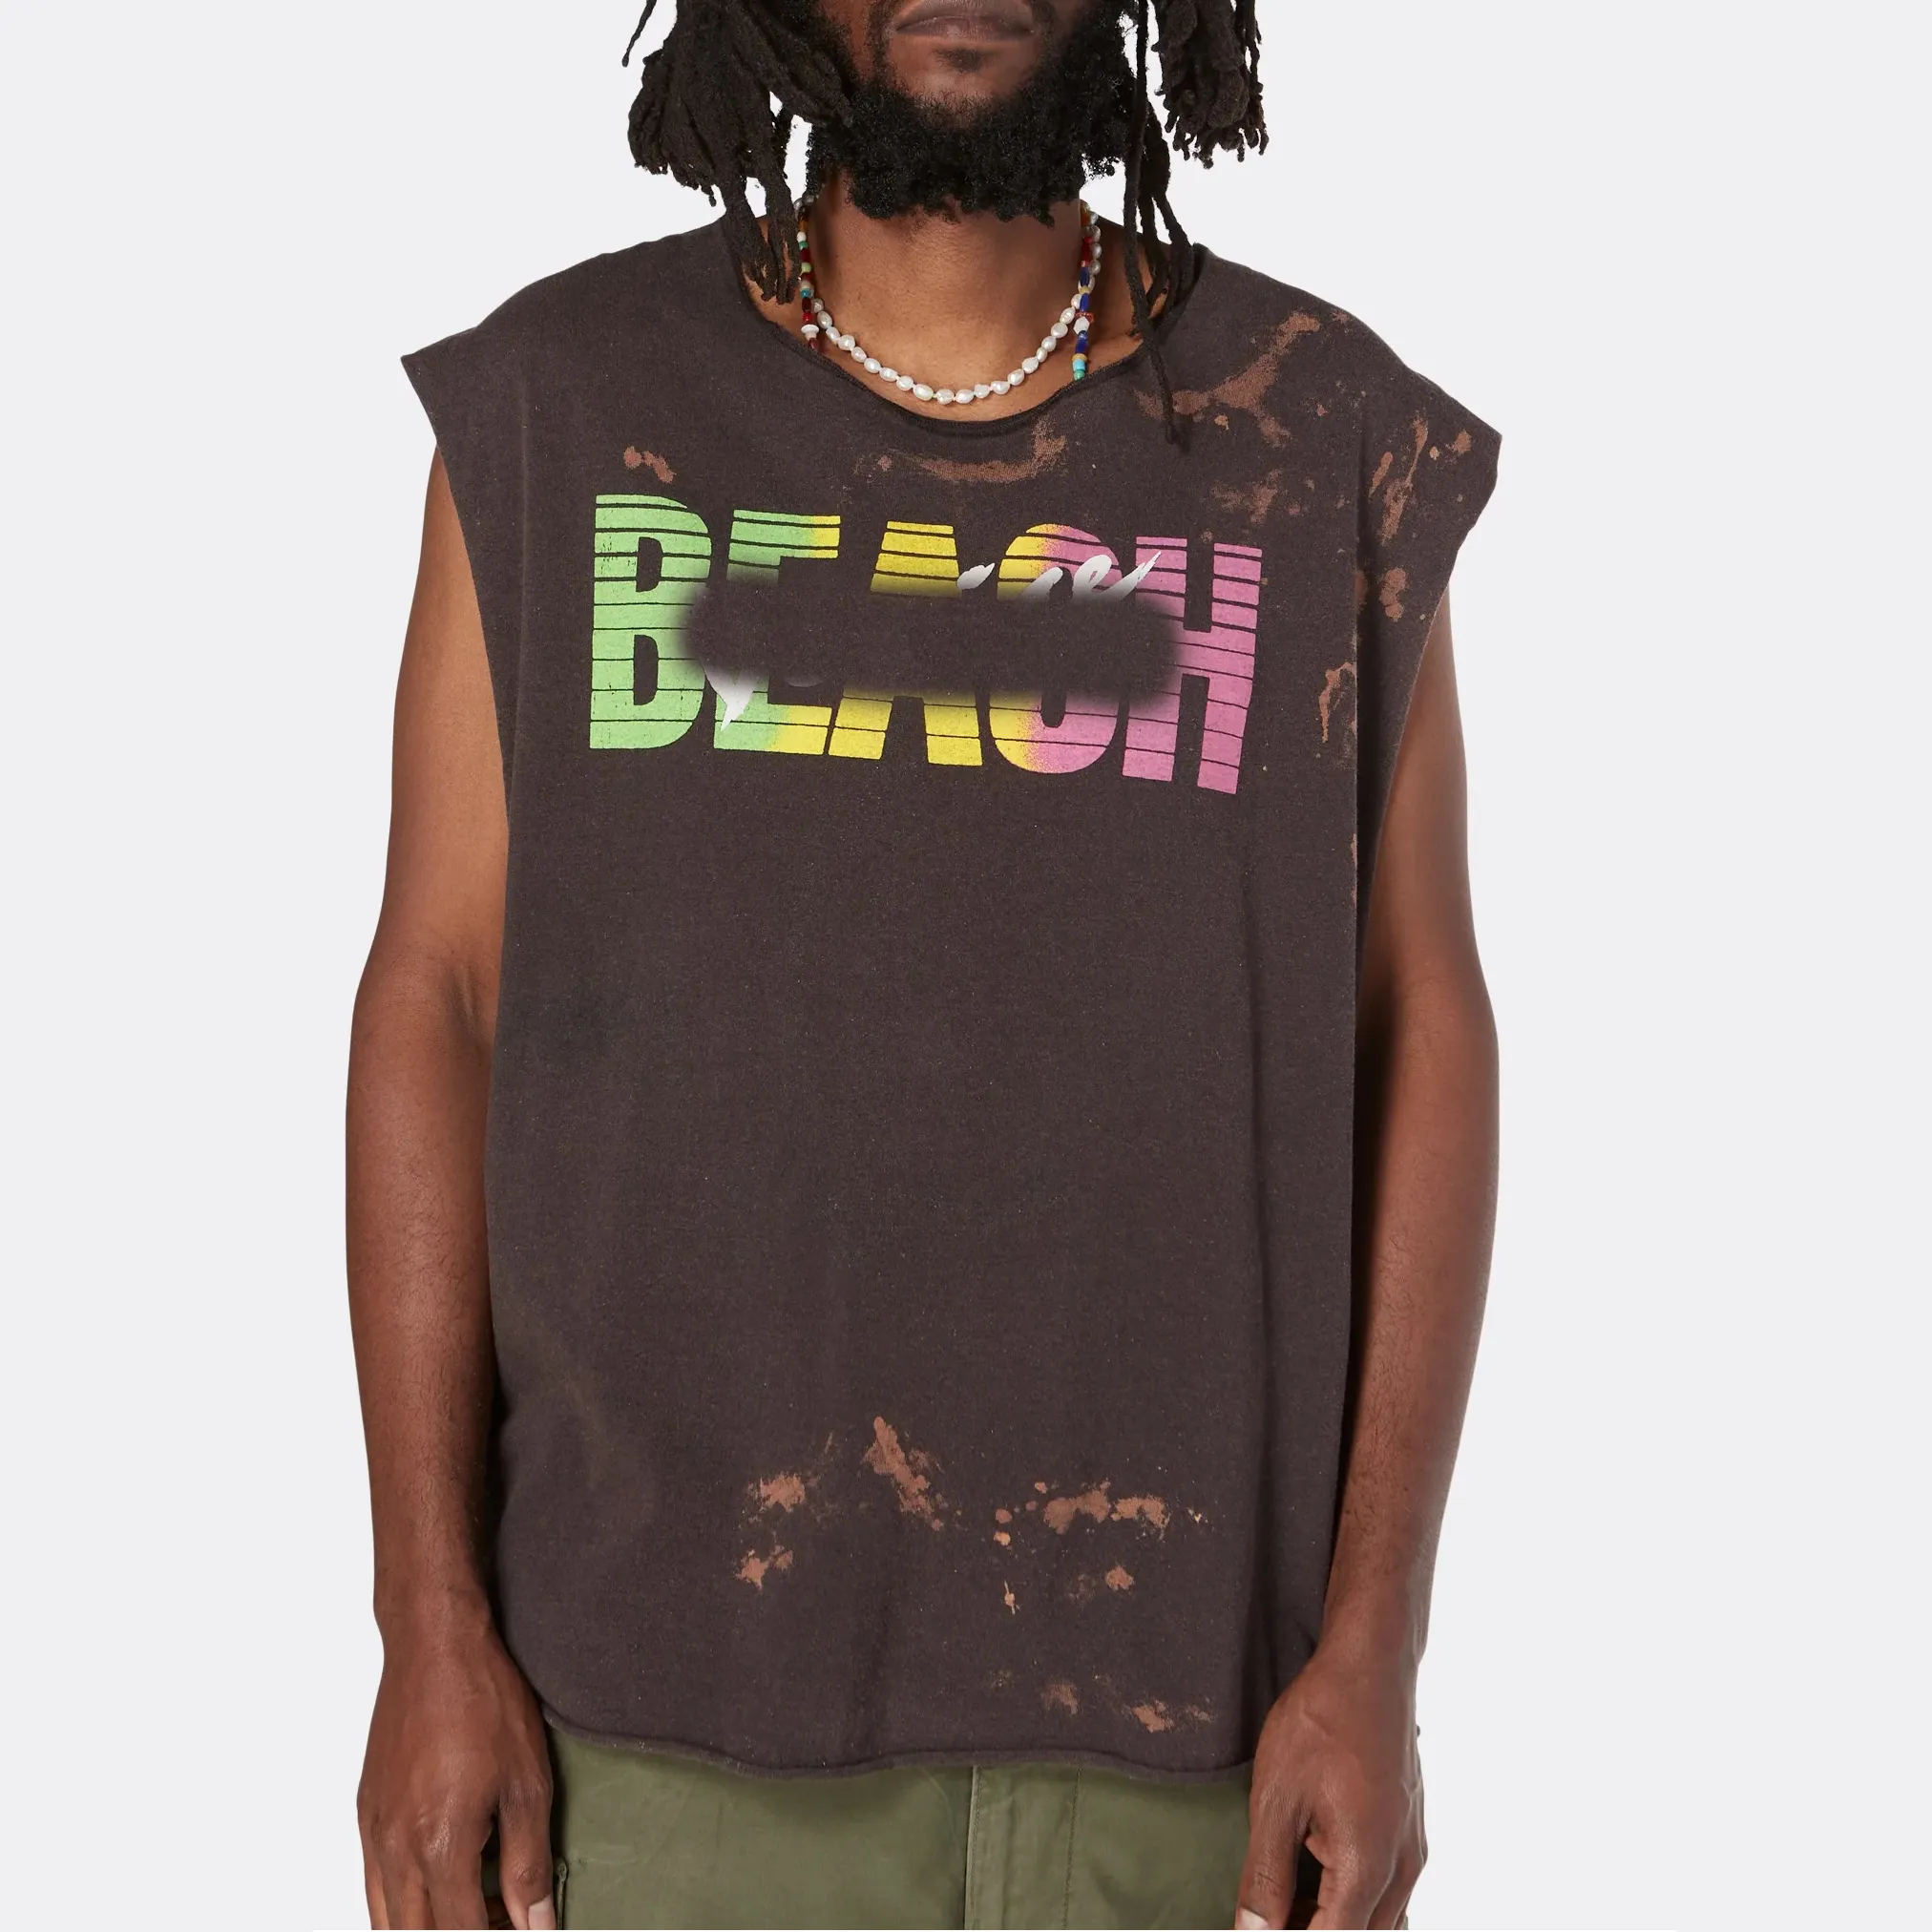 Camiseta sin mangas personalizada para hombre, camiseta reflectante de pintura muscular informal